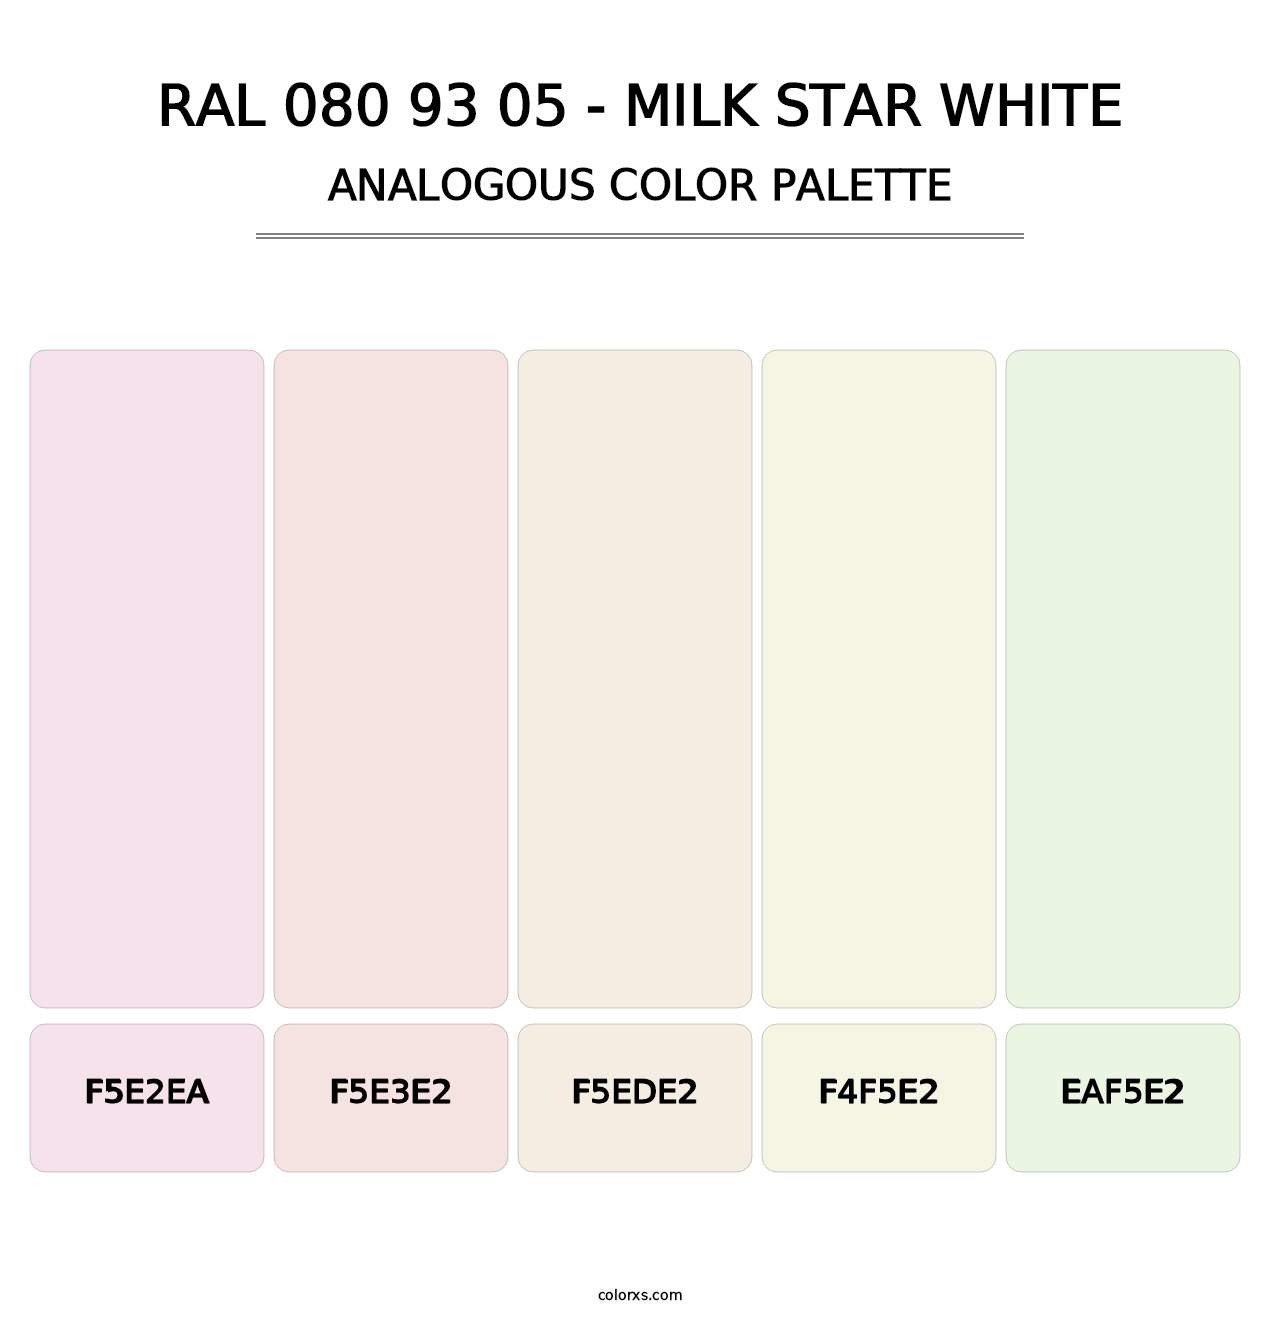 RAL 080 93 05 - Milk Star White - Analogous Color Palette